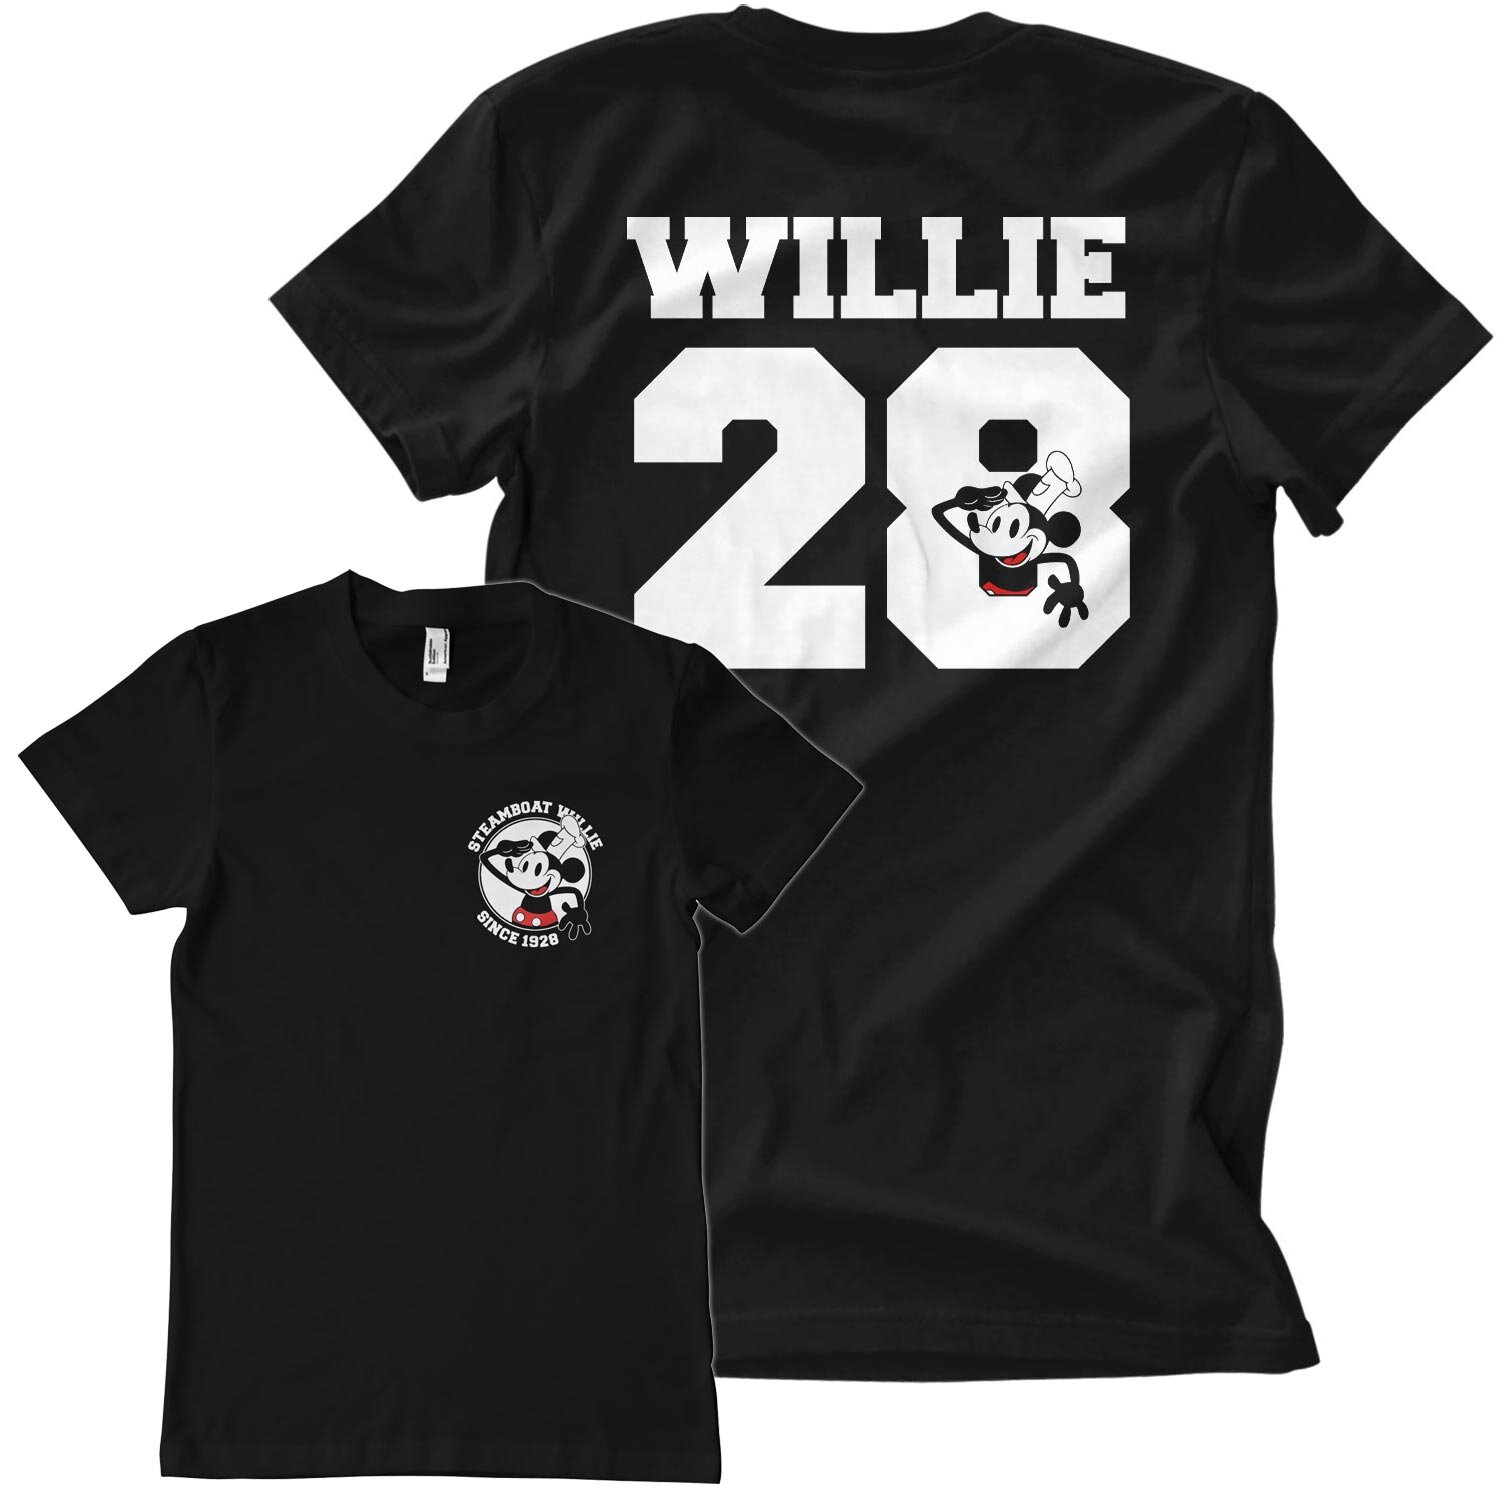 Willie 28 T-Shirt